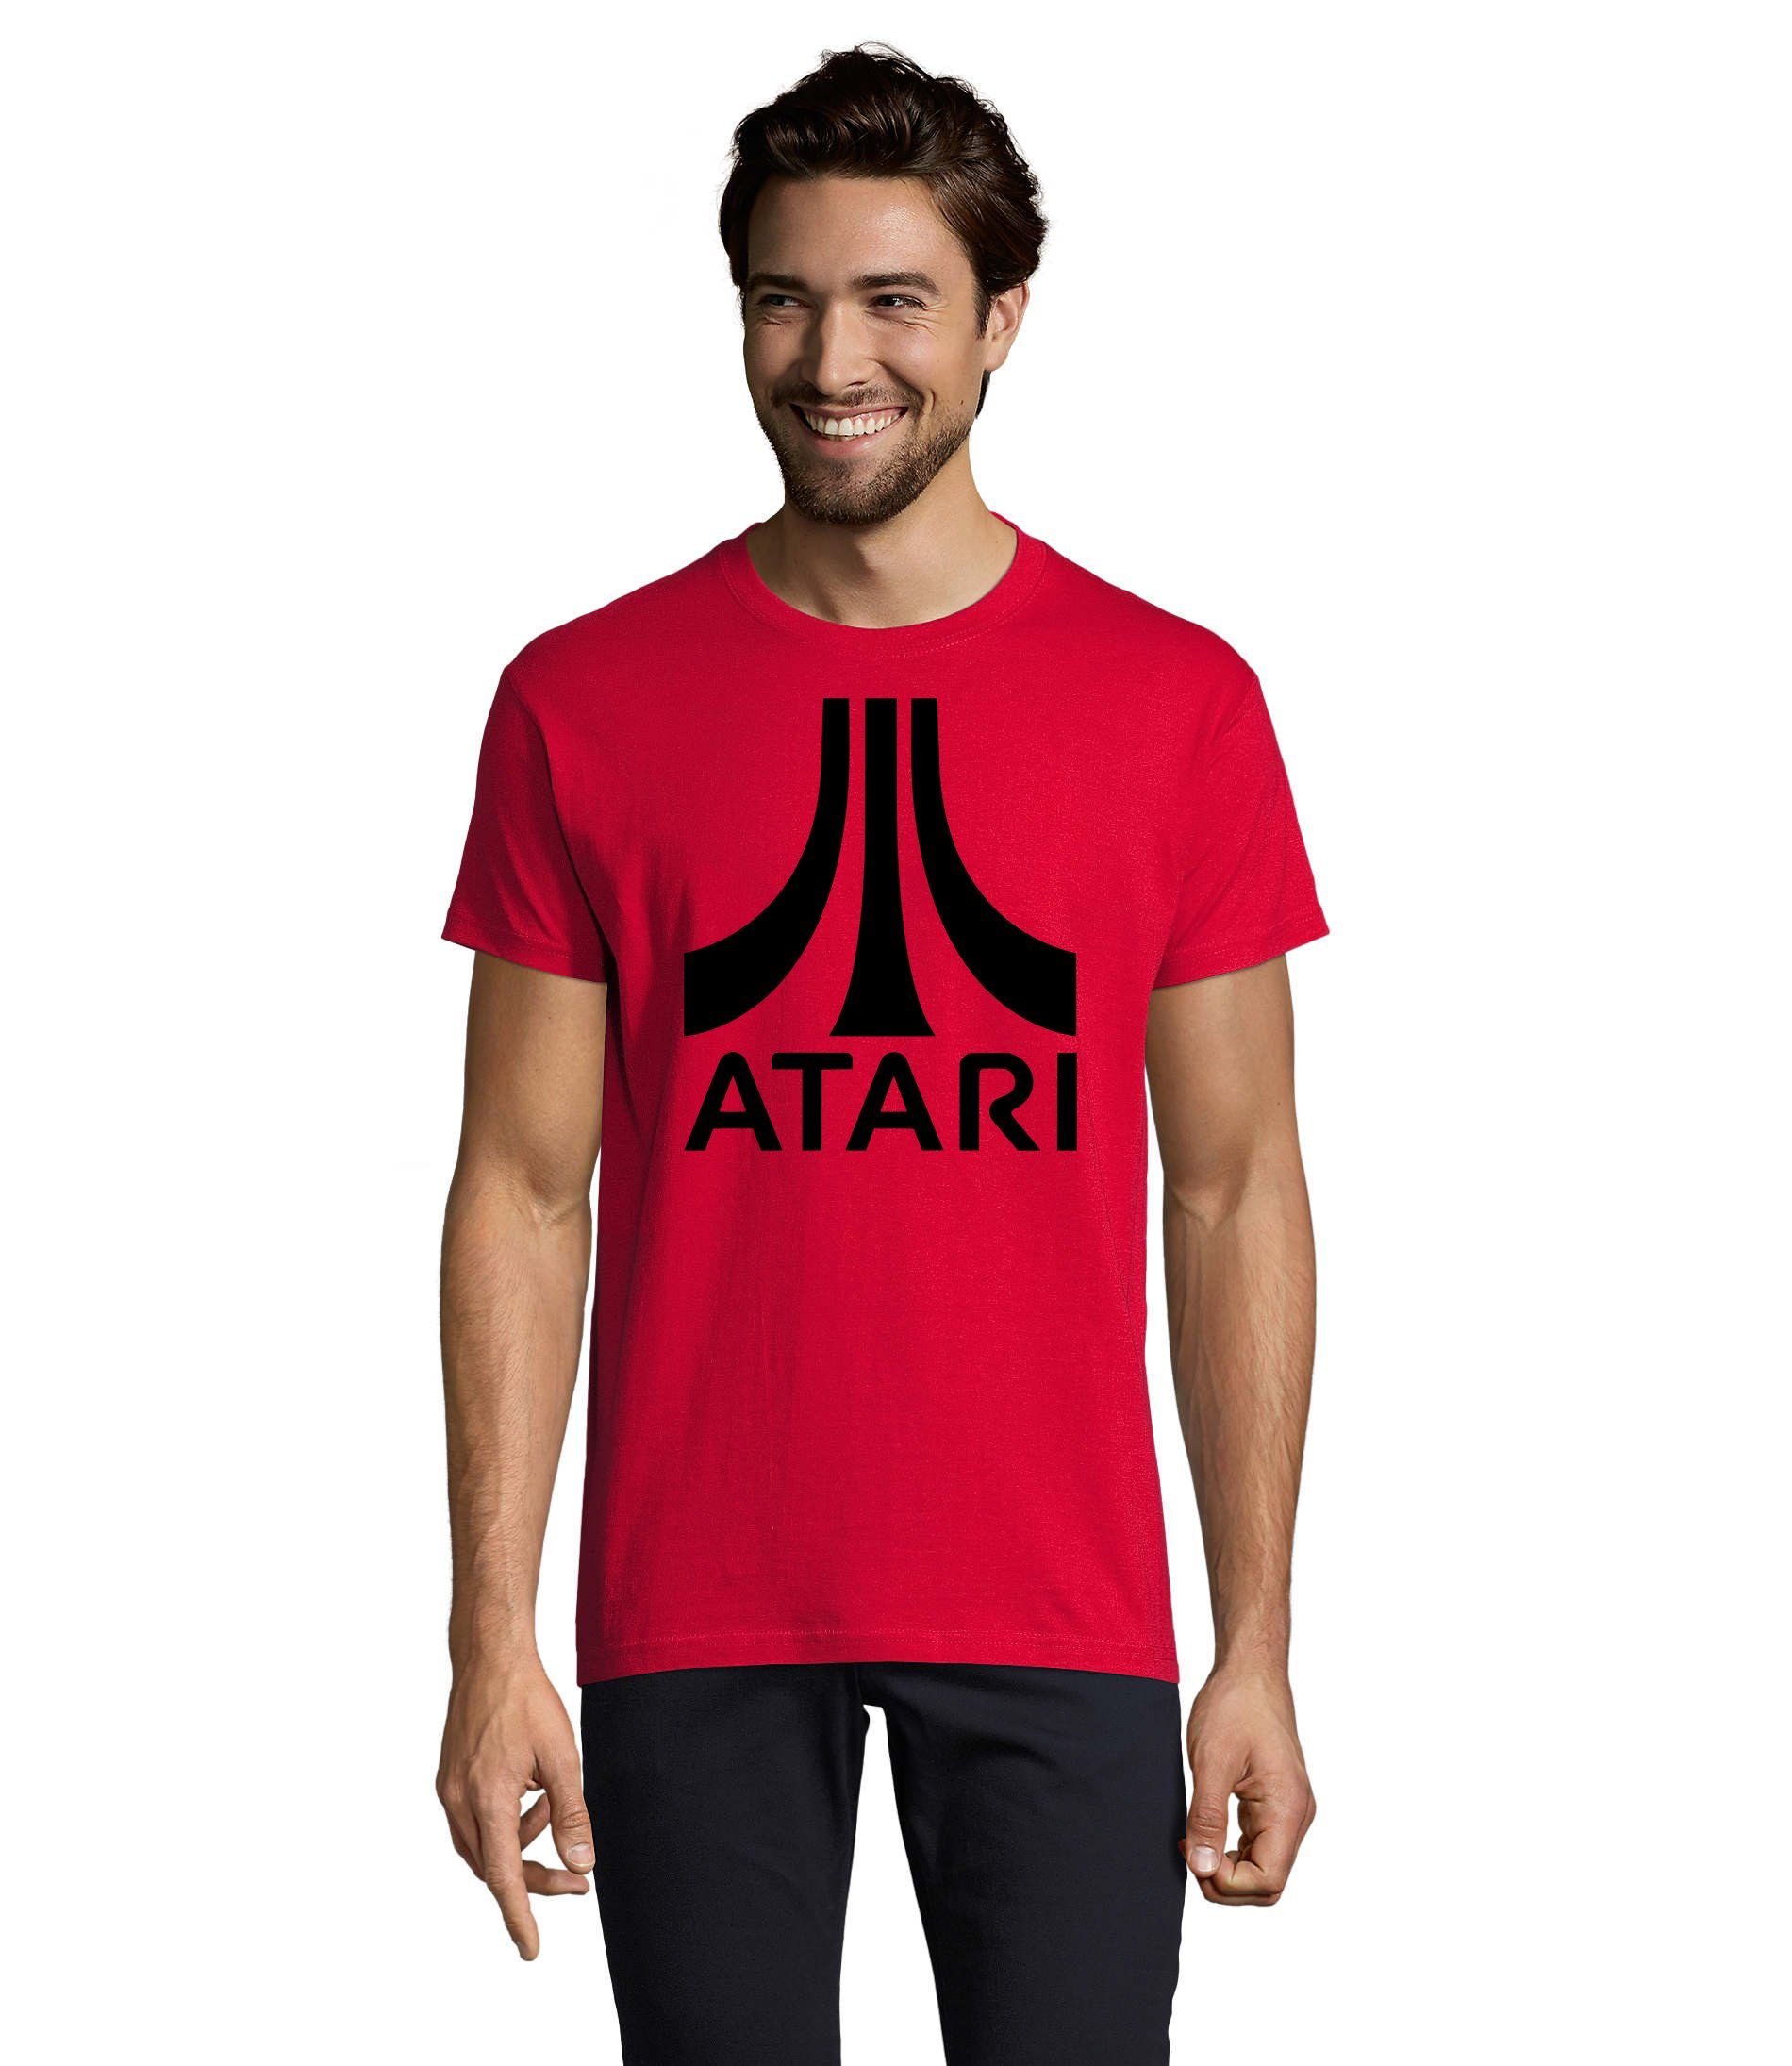 Blondie & Brownie T-Shirt Konsole Herren Atari Nintendo Spiele Gamer Gaming Rot